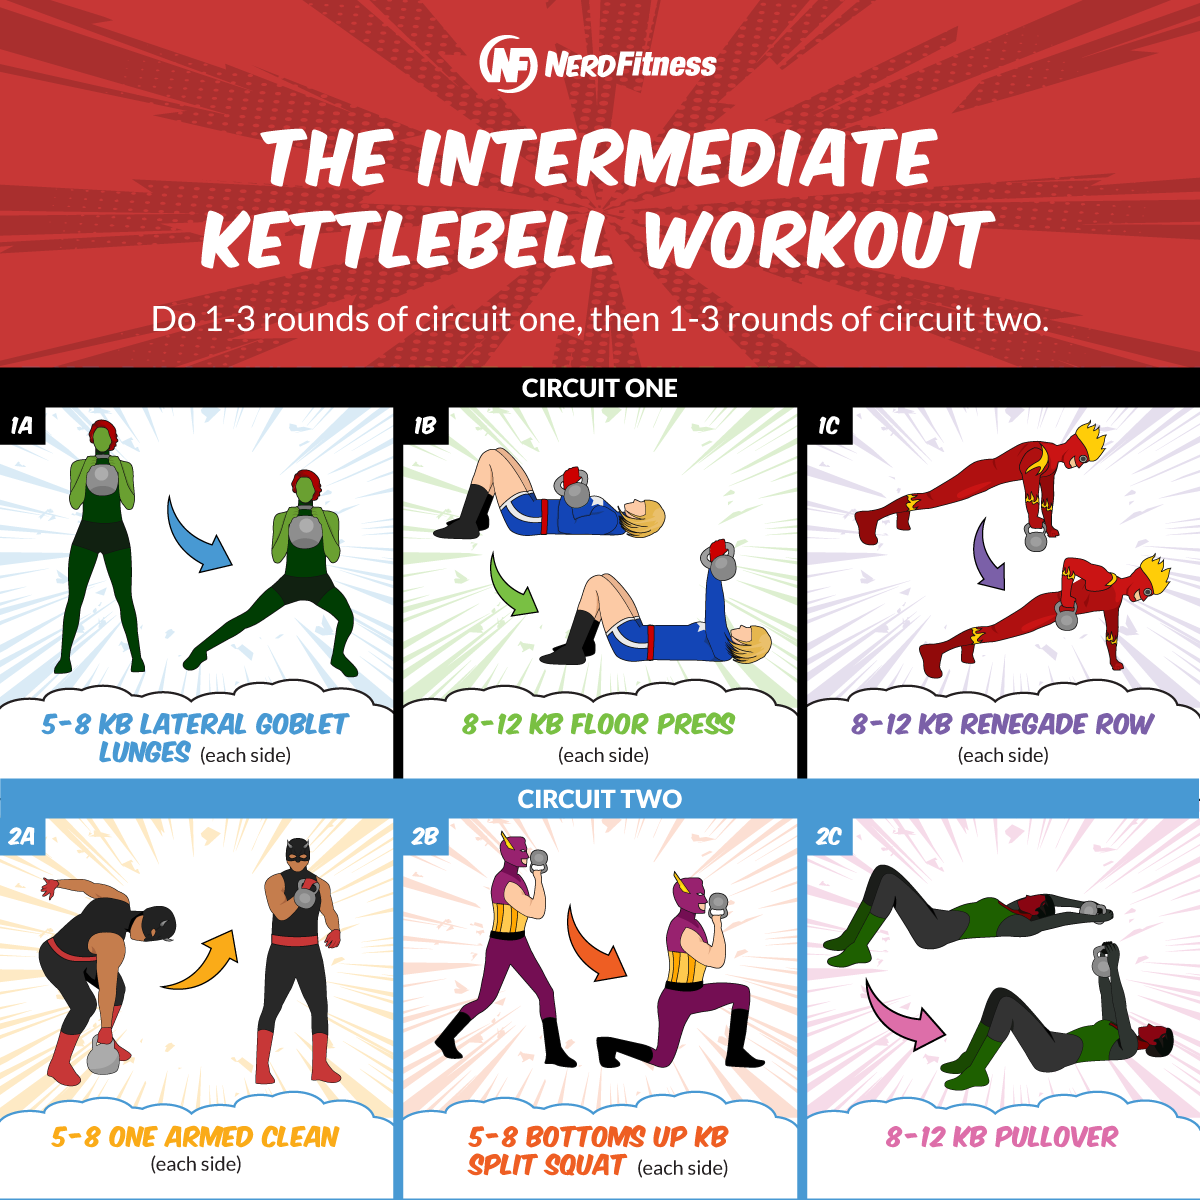 An infographic showing the Nerd Fitness Intermediate Kettlebell Workout